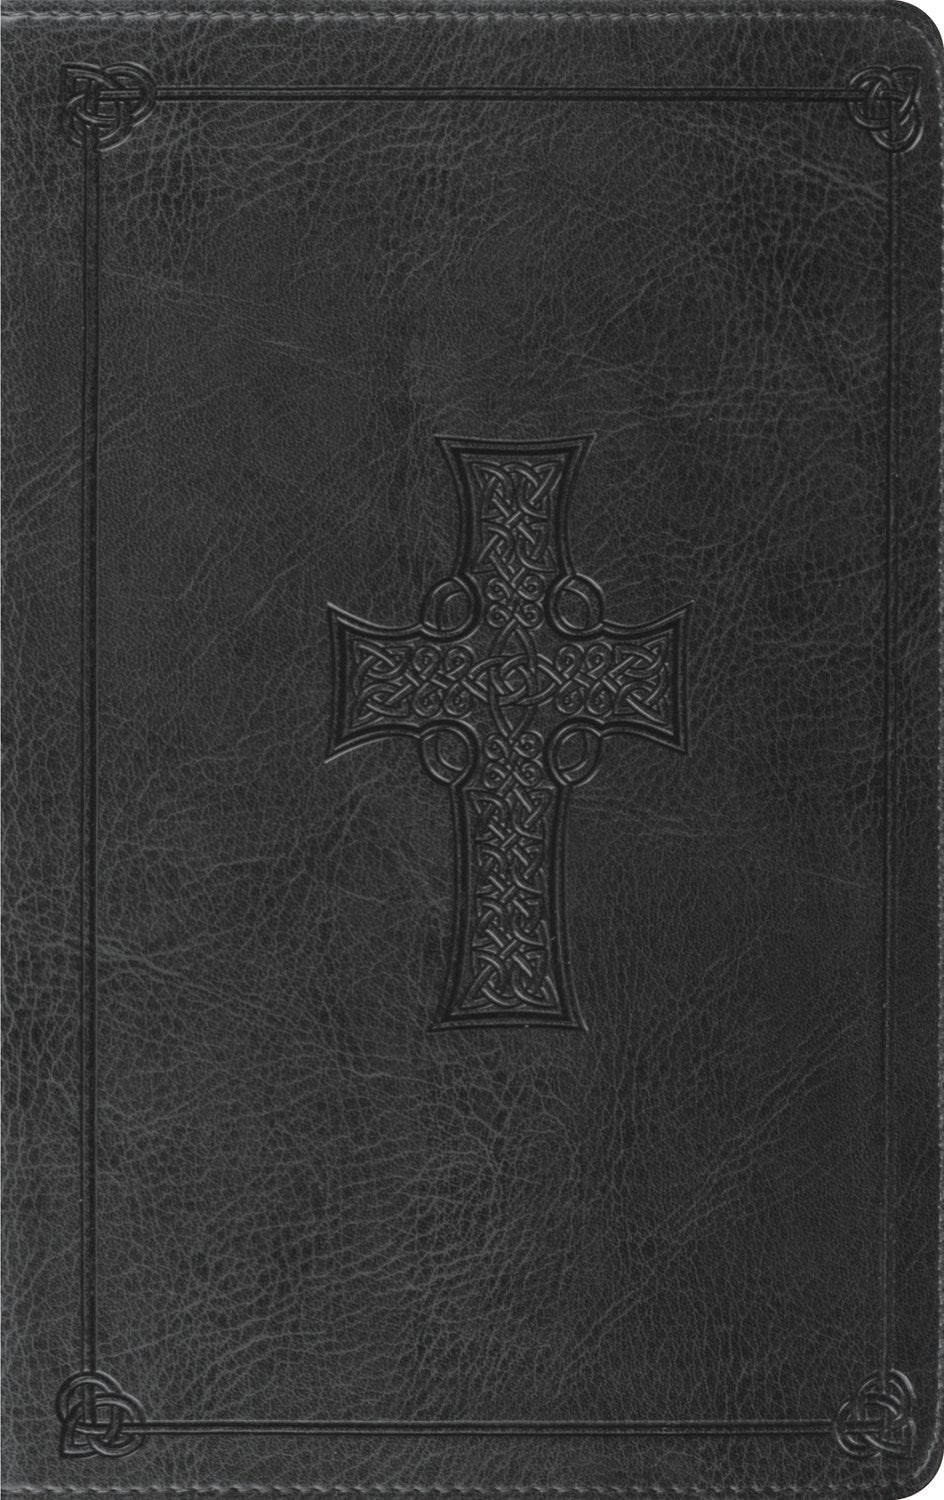 ESV Thinline Bible-Charcoal Celtic Cross Design TruTone